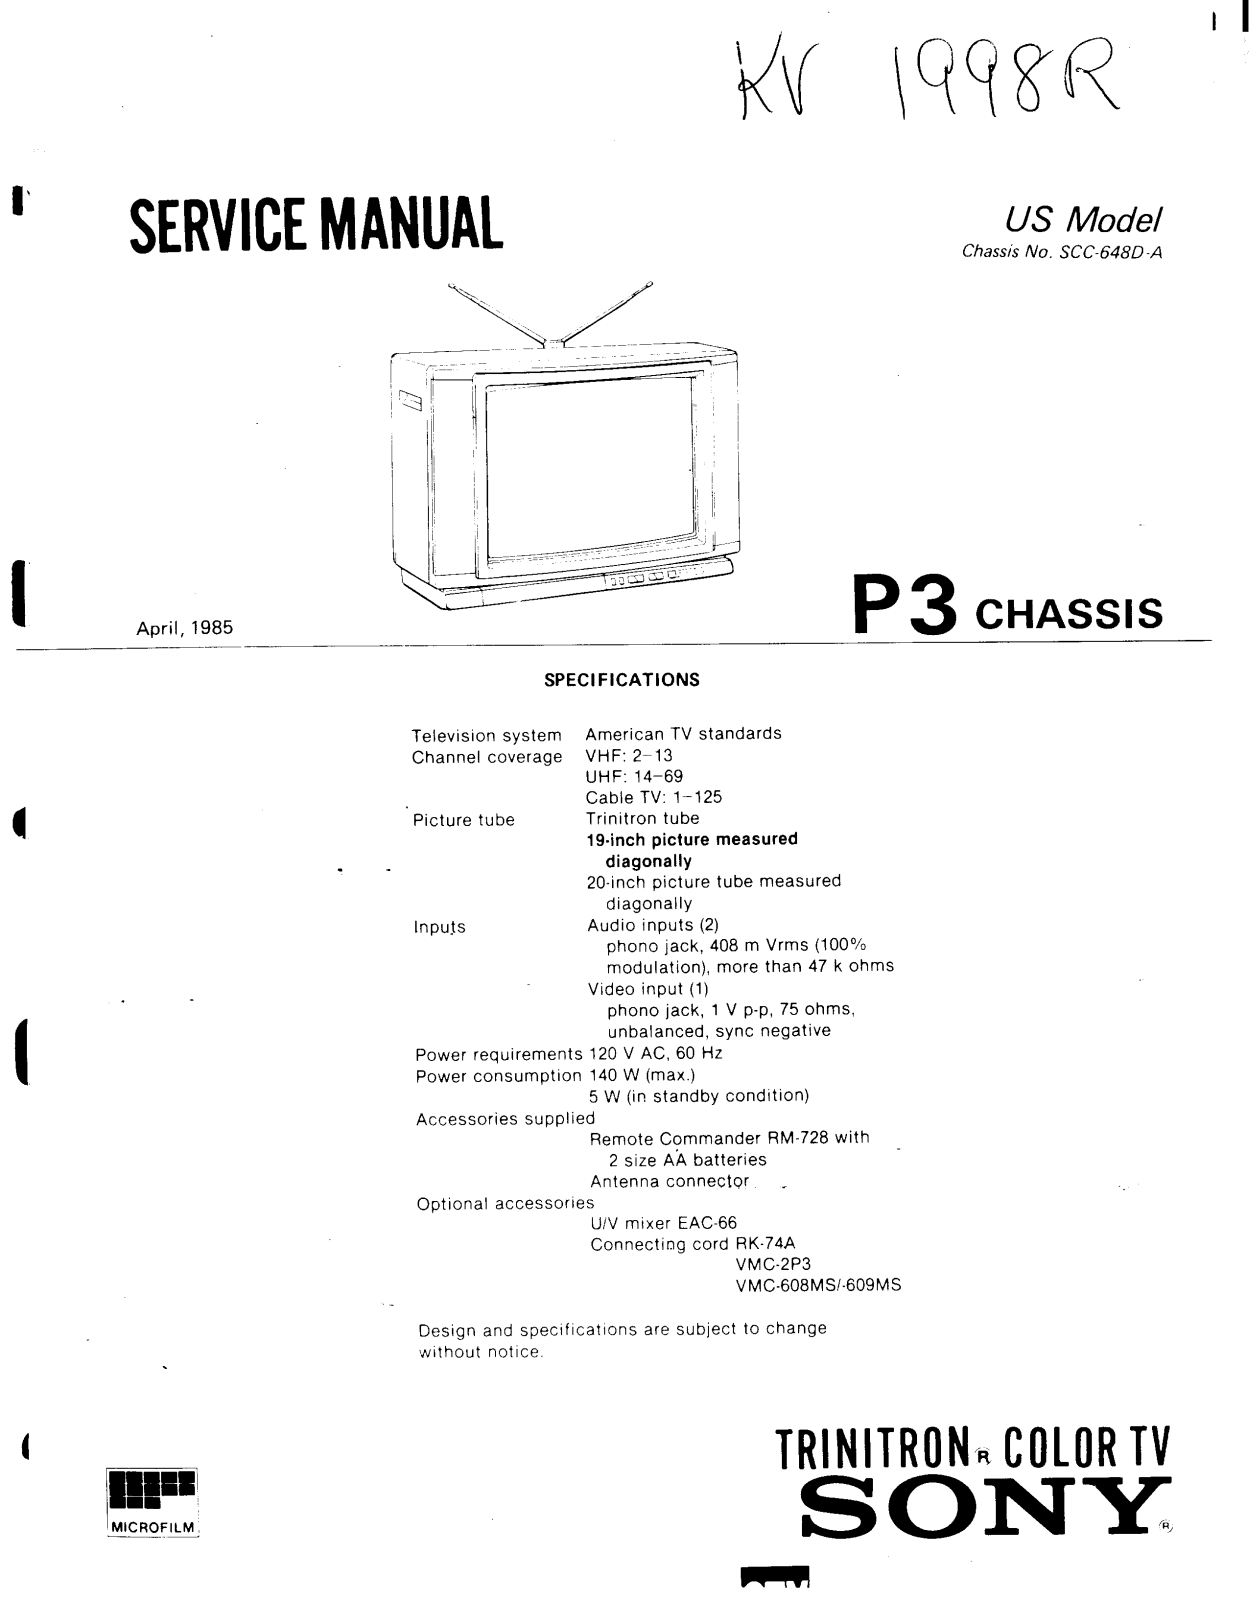 Sony KV-1998R Operating manual